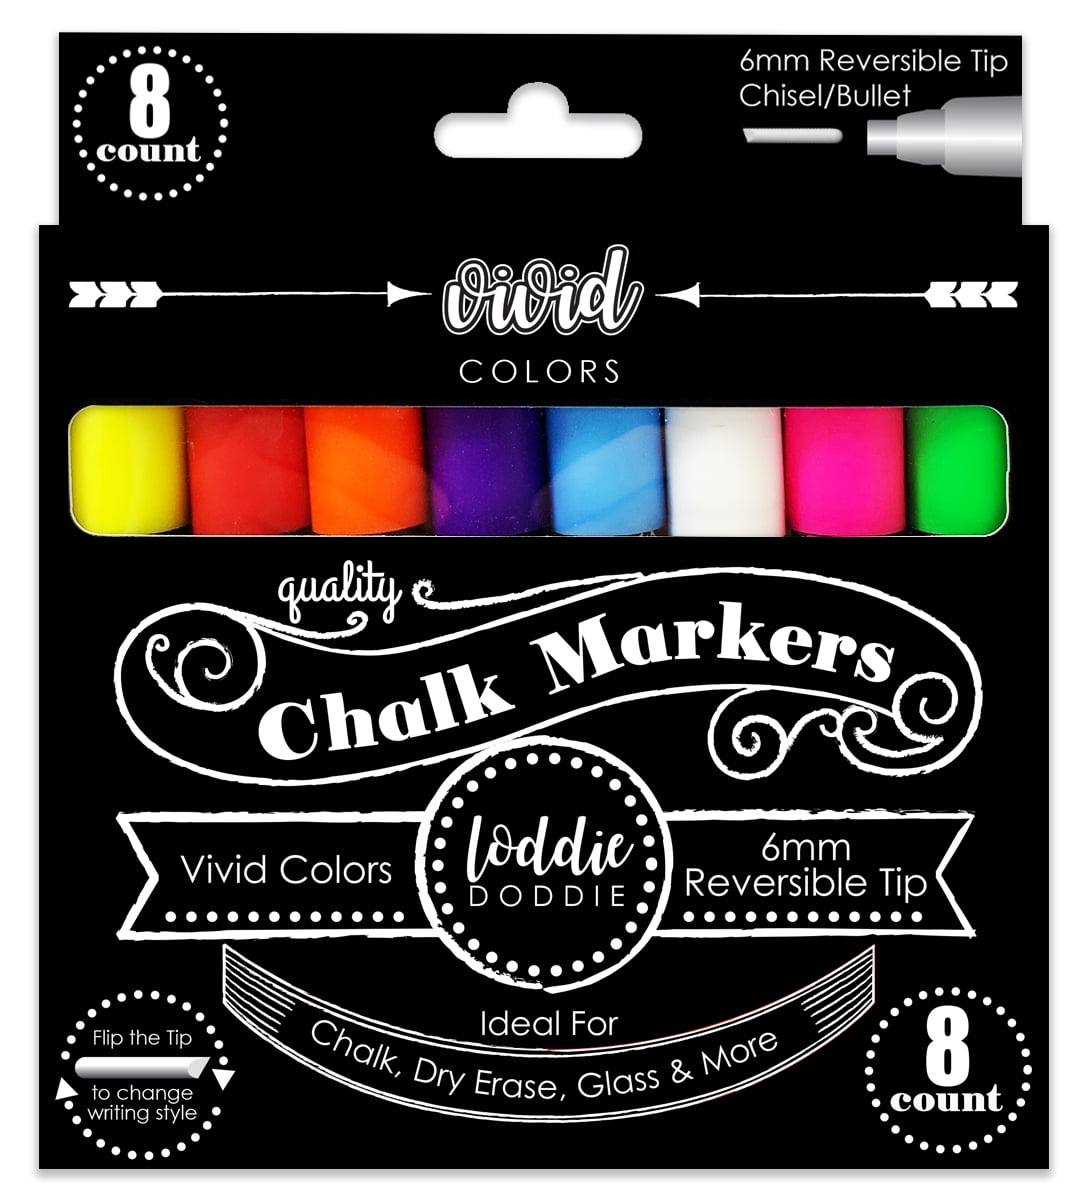 Carmel Liquid Chalk Marker Medium Tip, Pack of 10 (Assorted Colors), R —  CHIMIYA